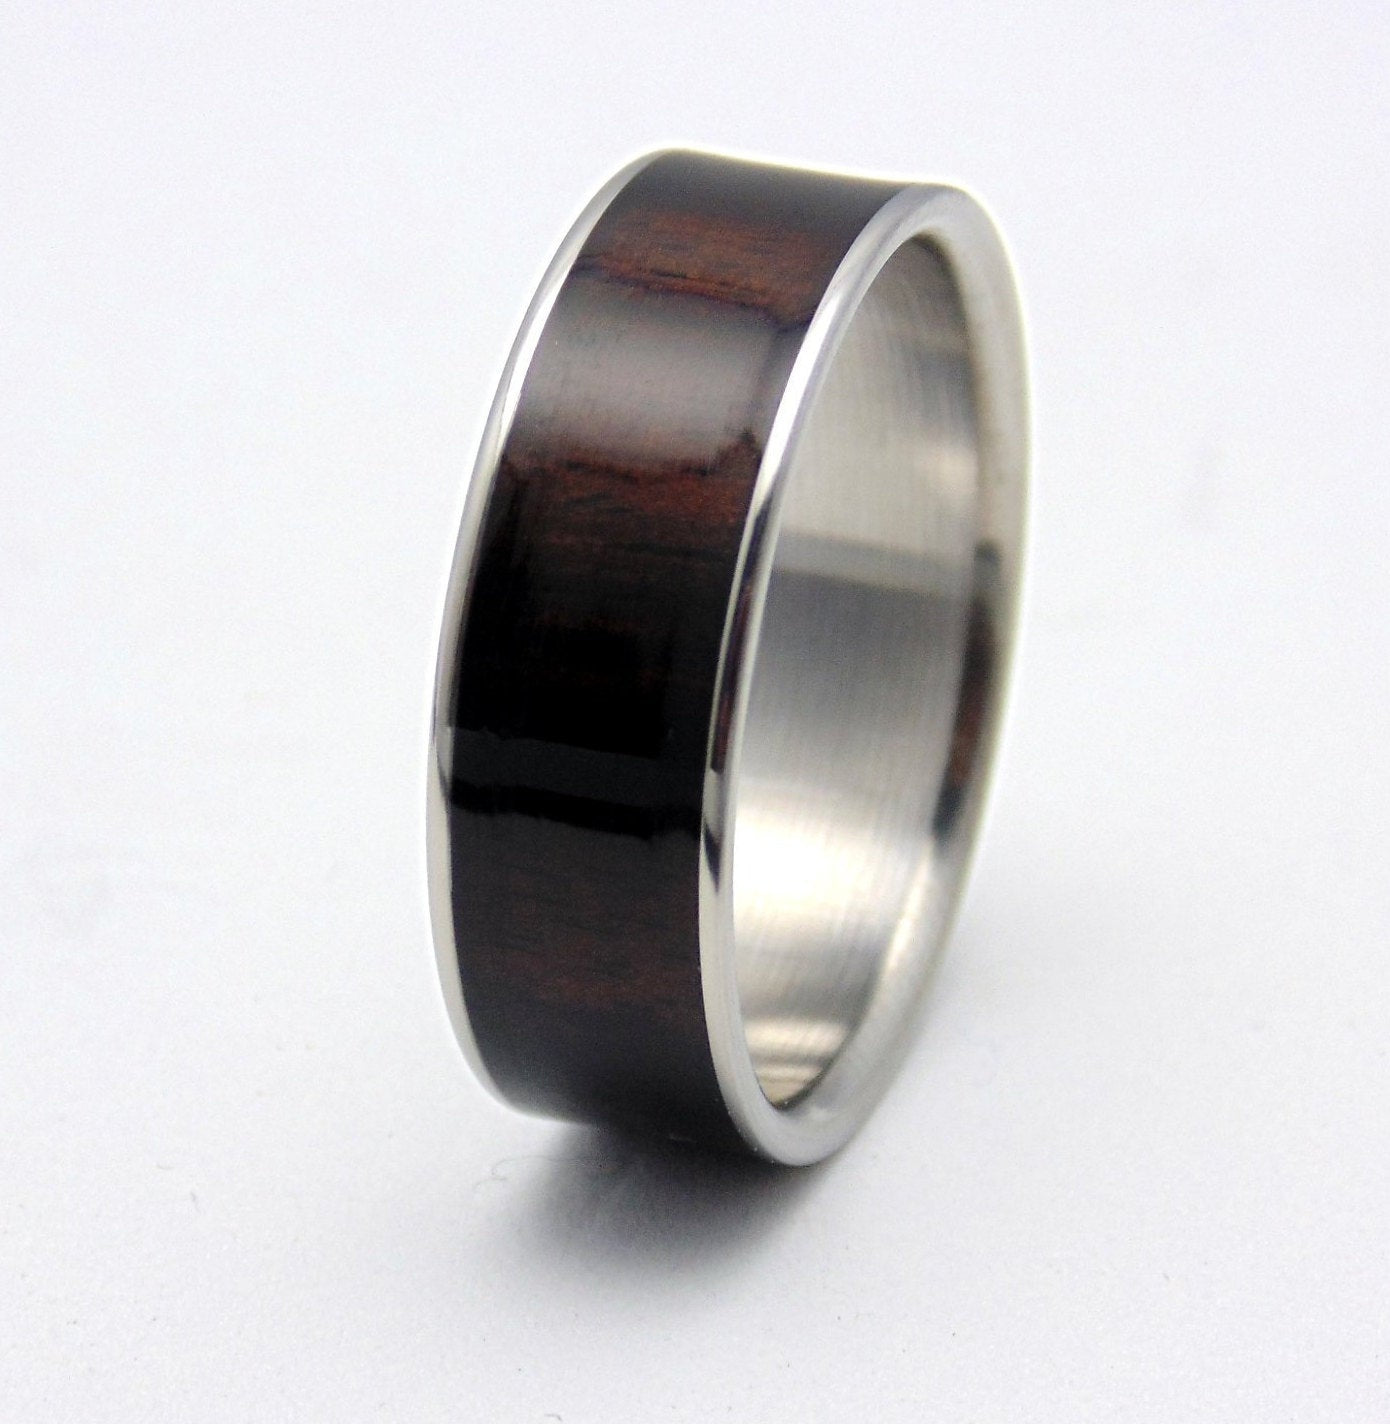 Titanium Ring with Ebony Wood Inlay